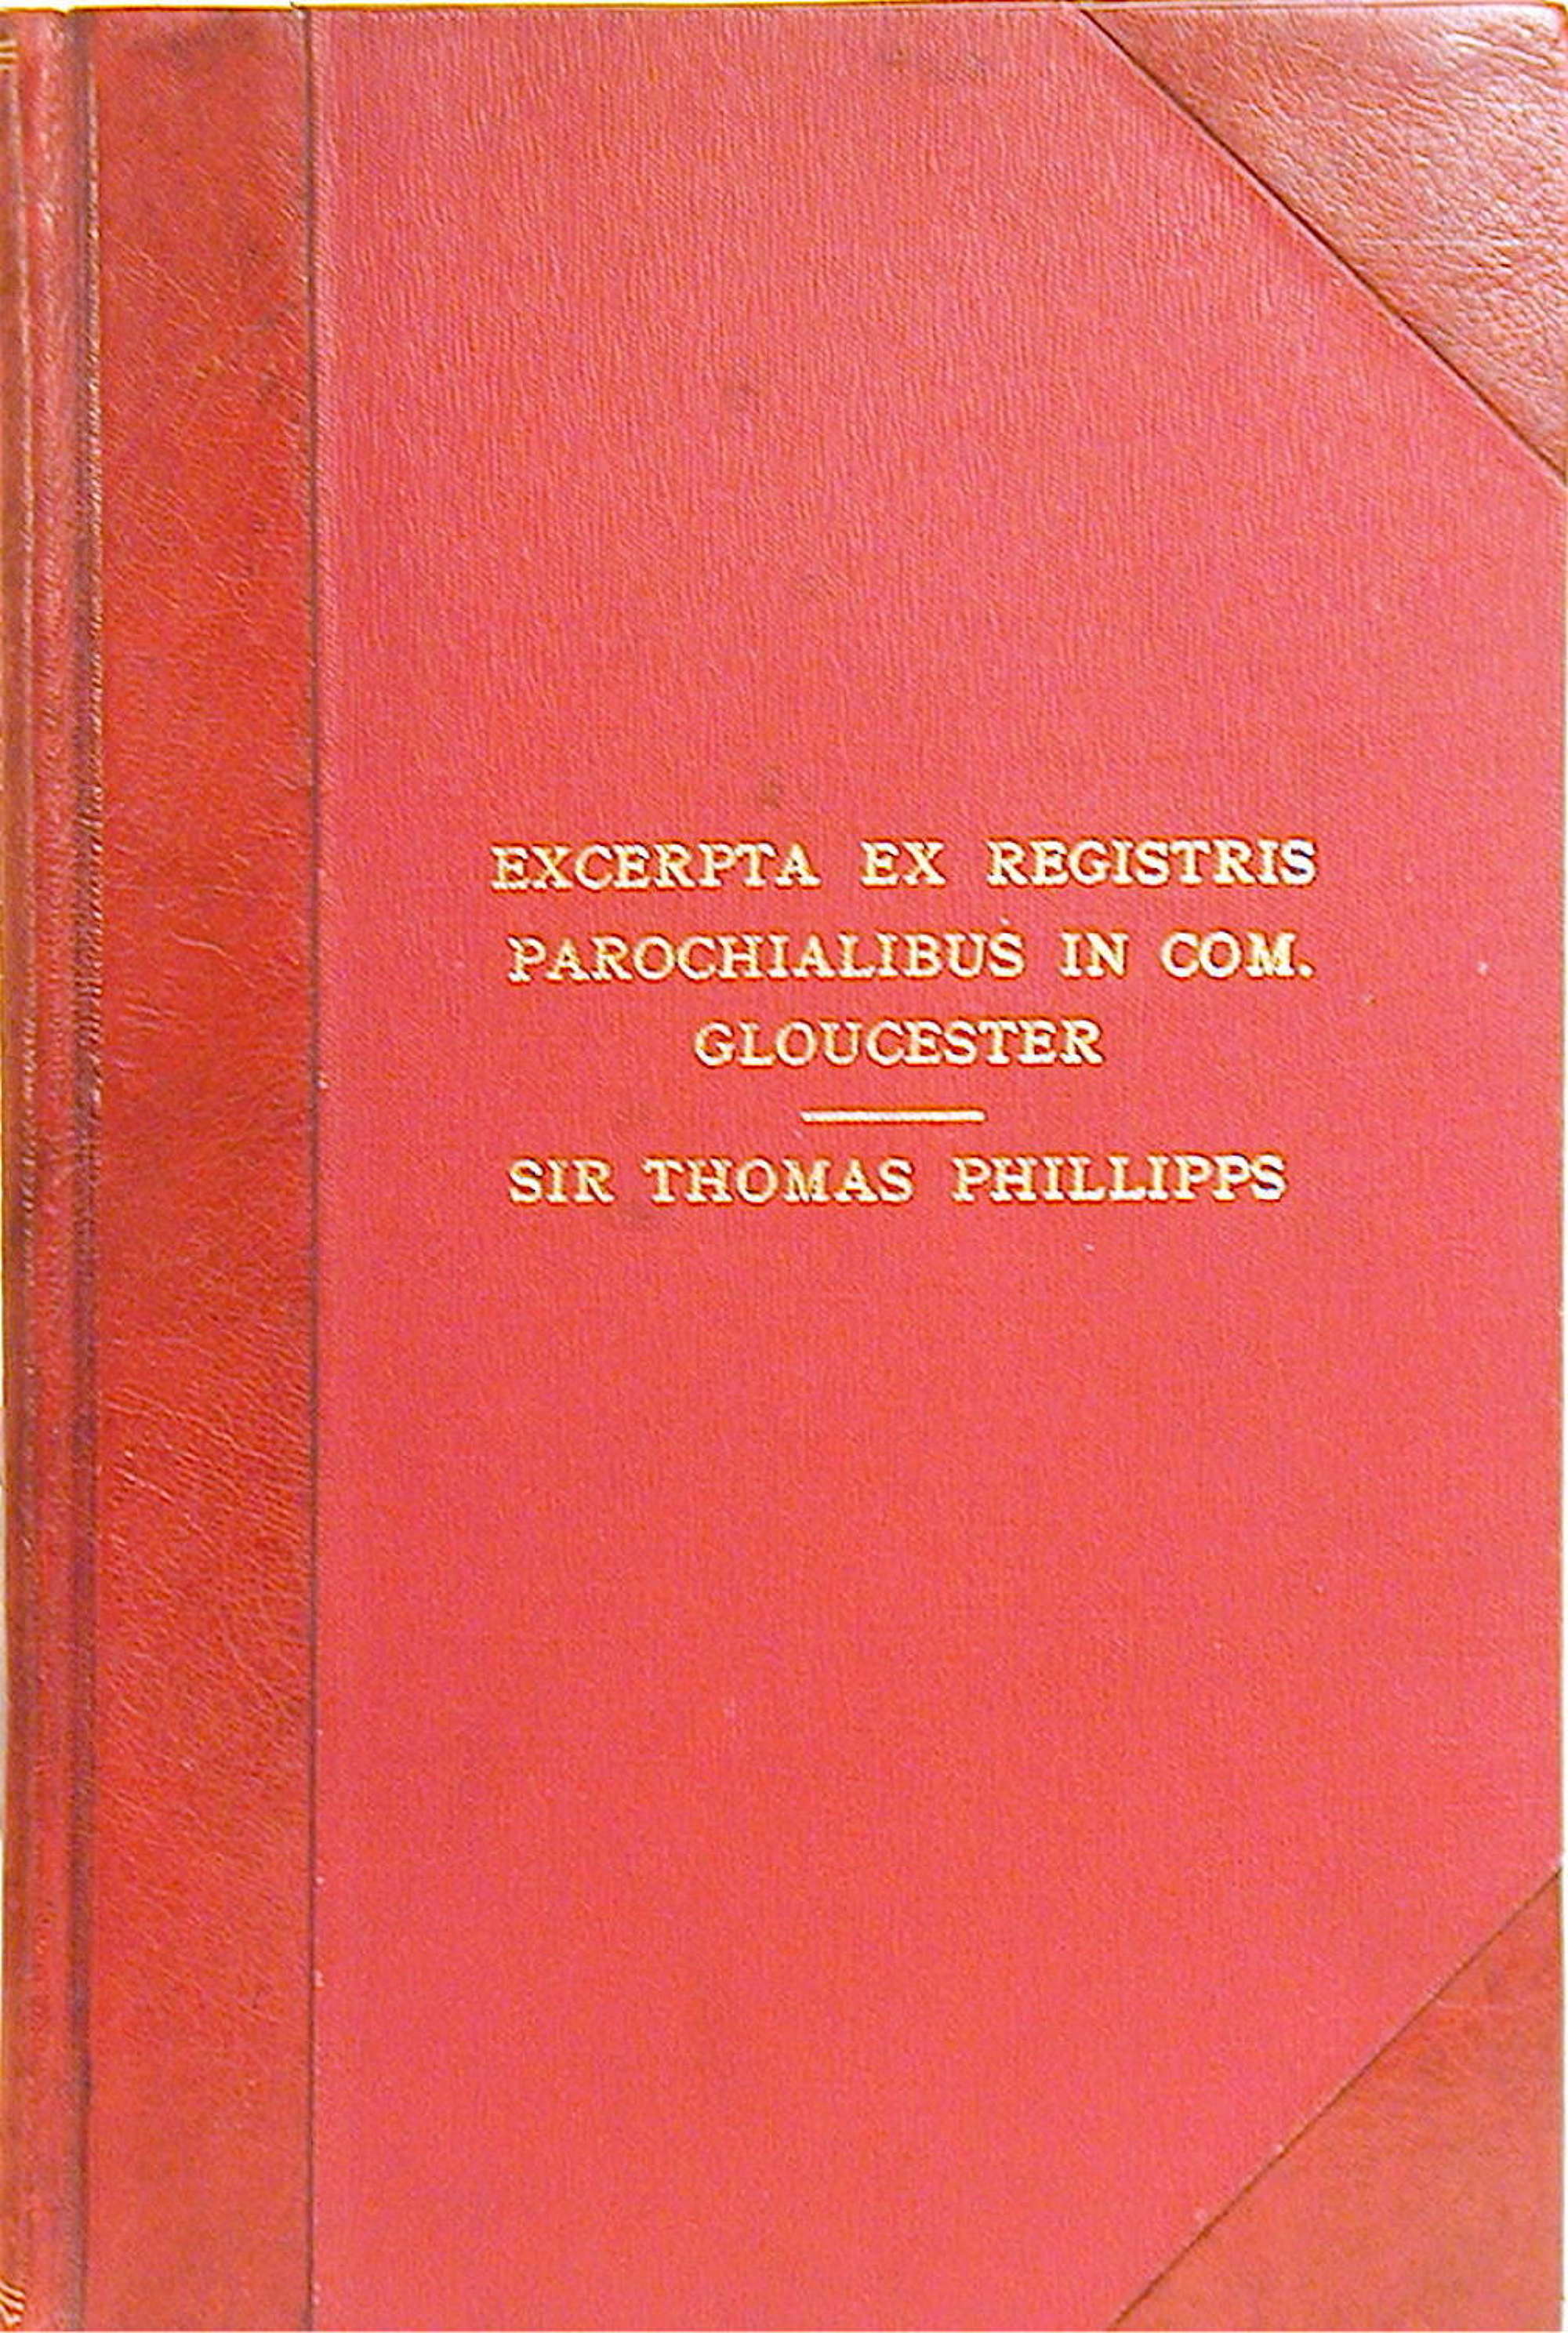 Transcripts of Parish registers of Gloucestershire, 1854